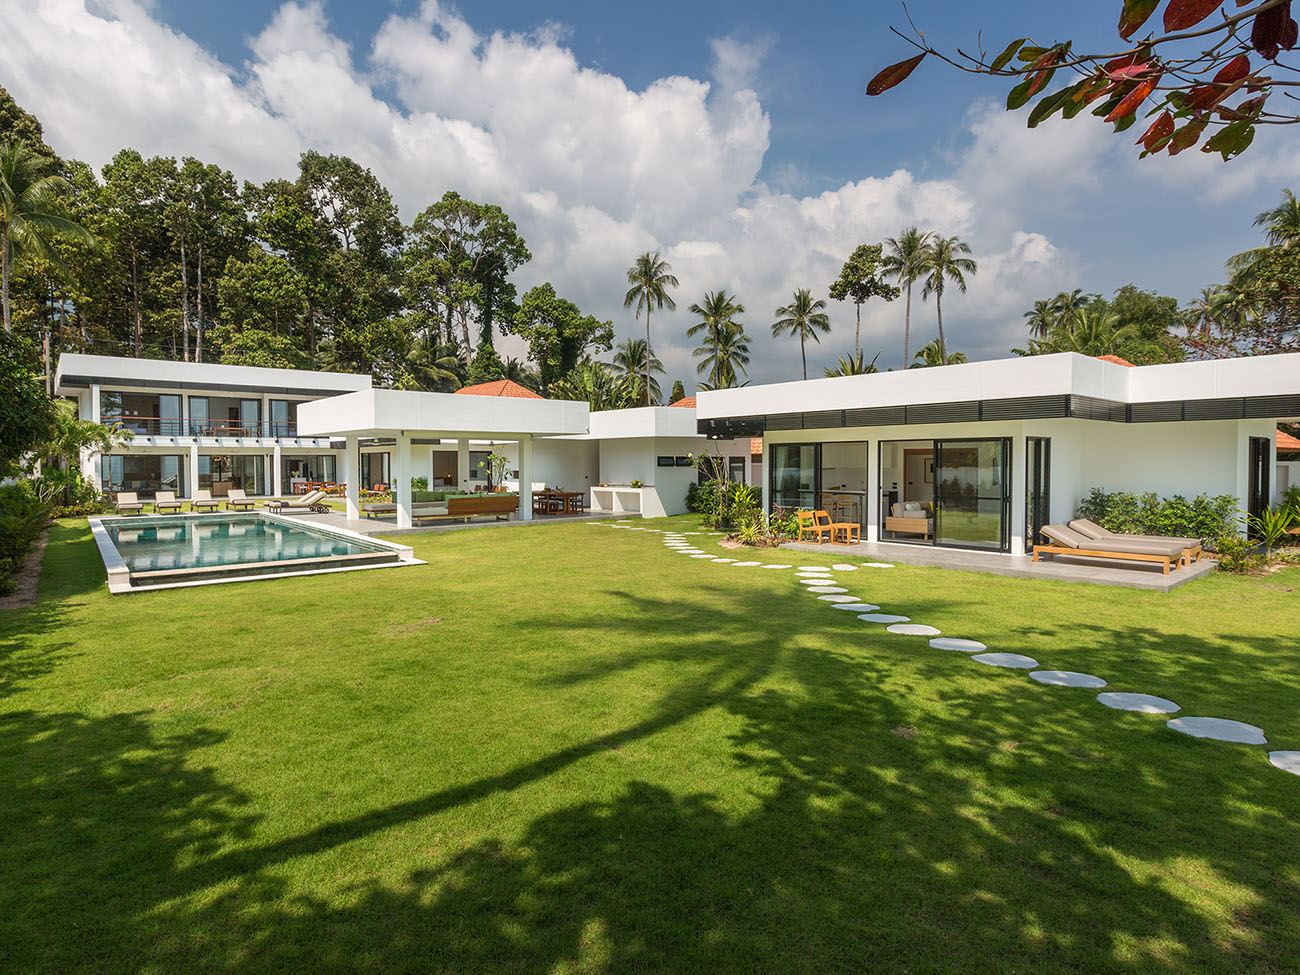 Villa Thansamaay